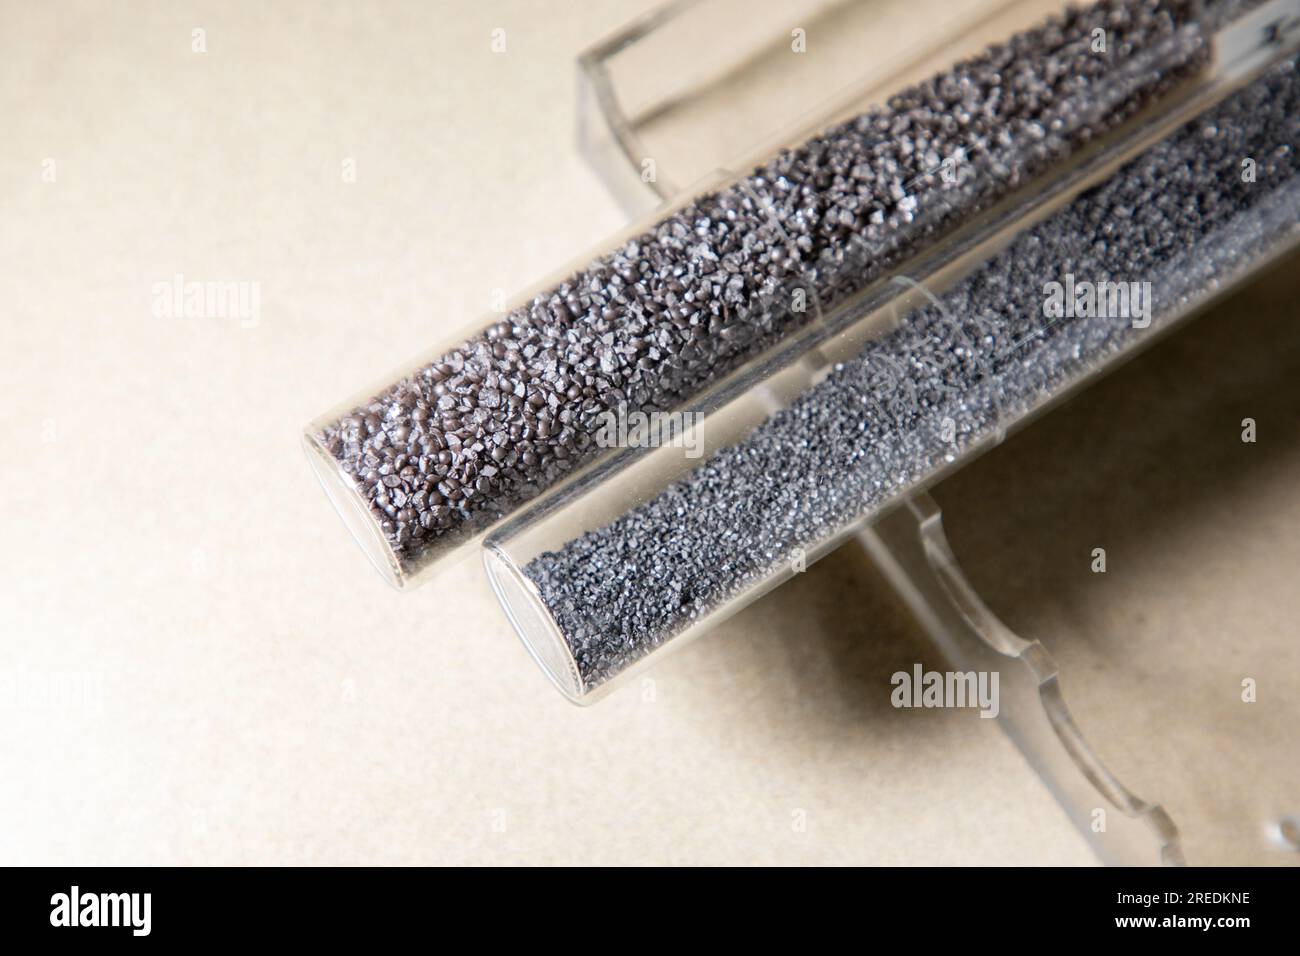 Close up of abrasive blasting media sample,cut wire shot peening,steel shot,Industrial concept Stock Photo